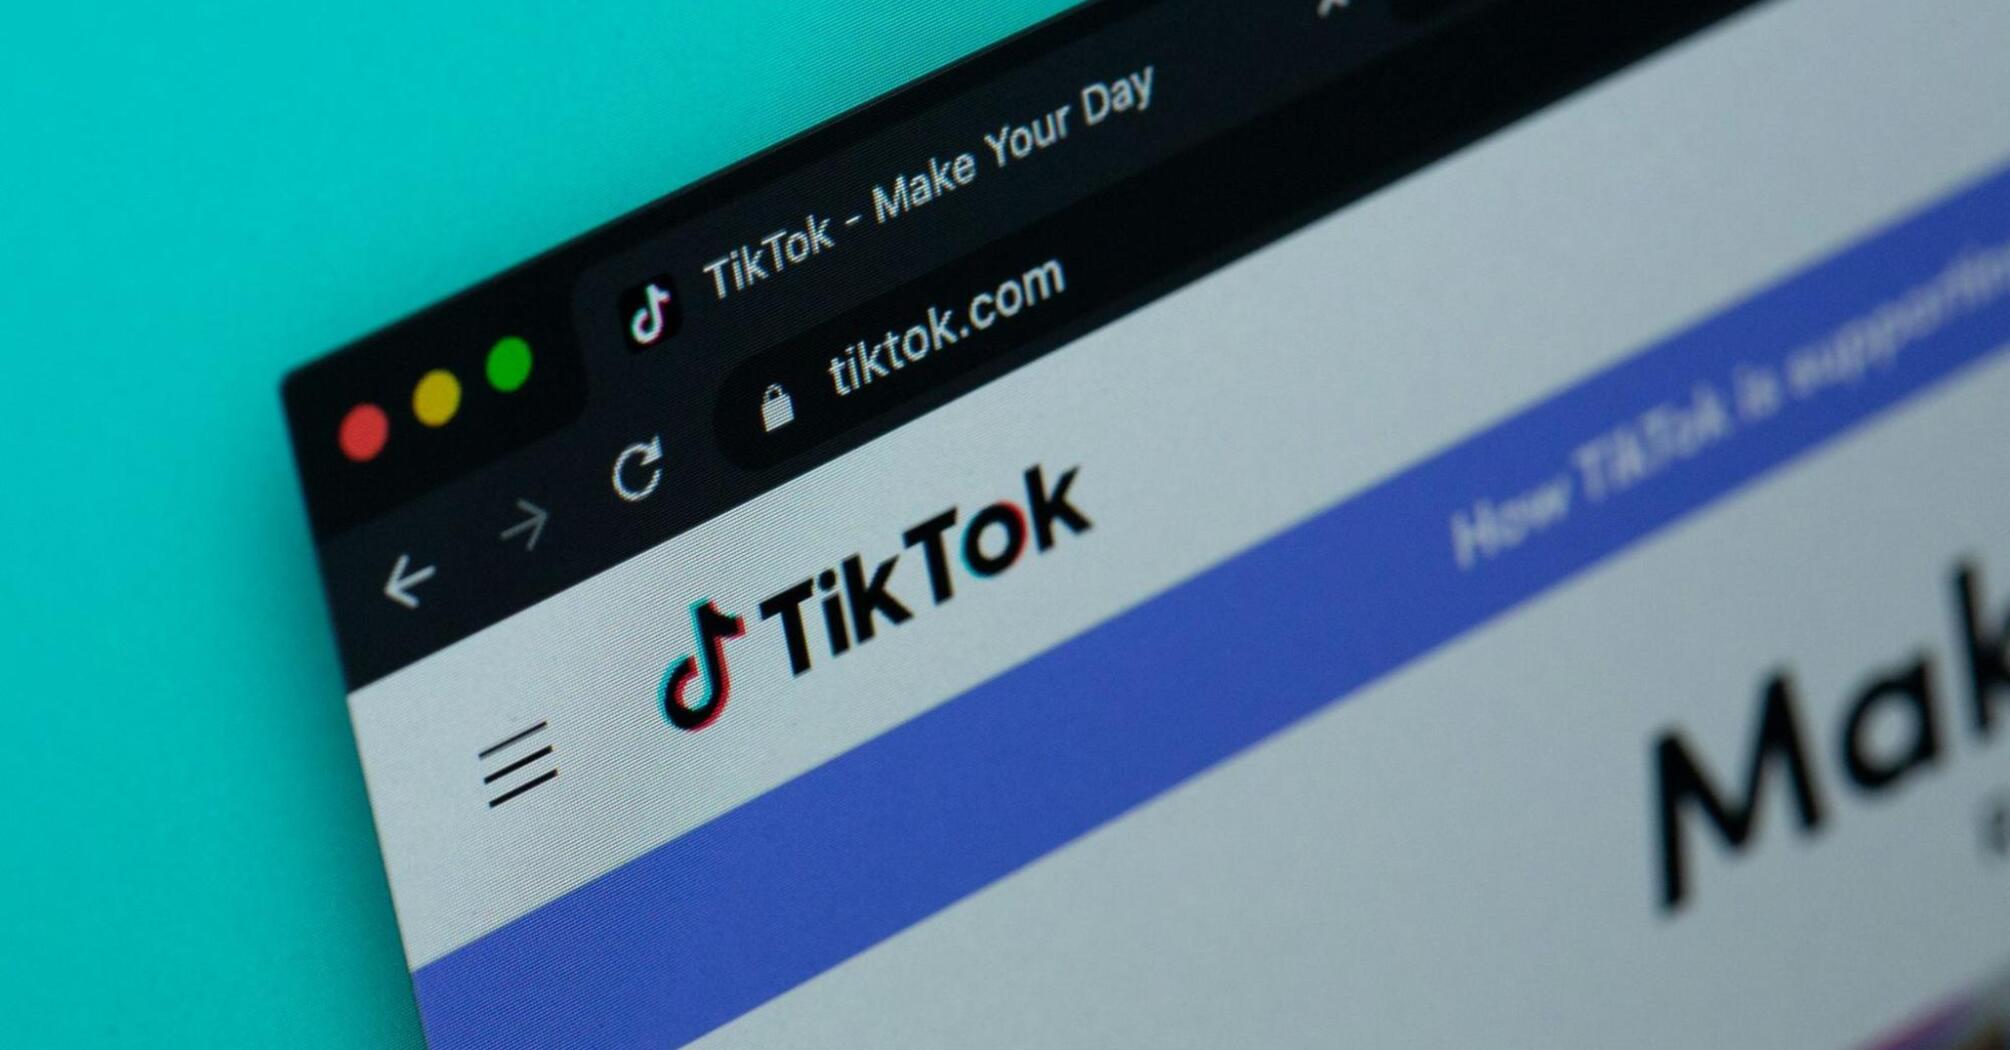 TikTok website homepage on a computer screen